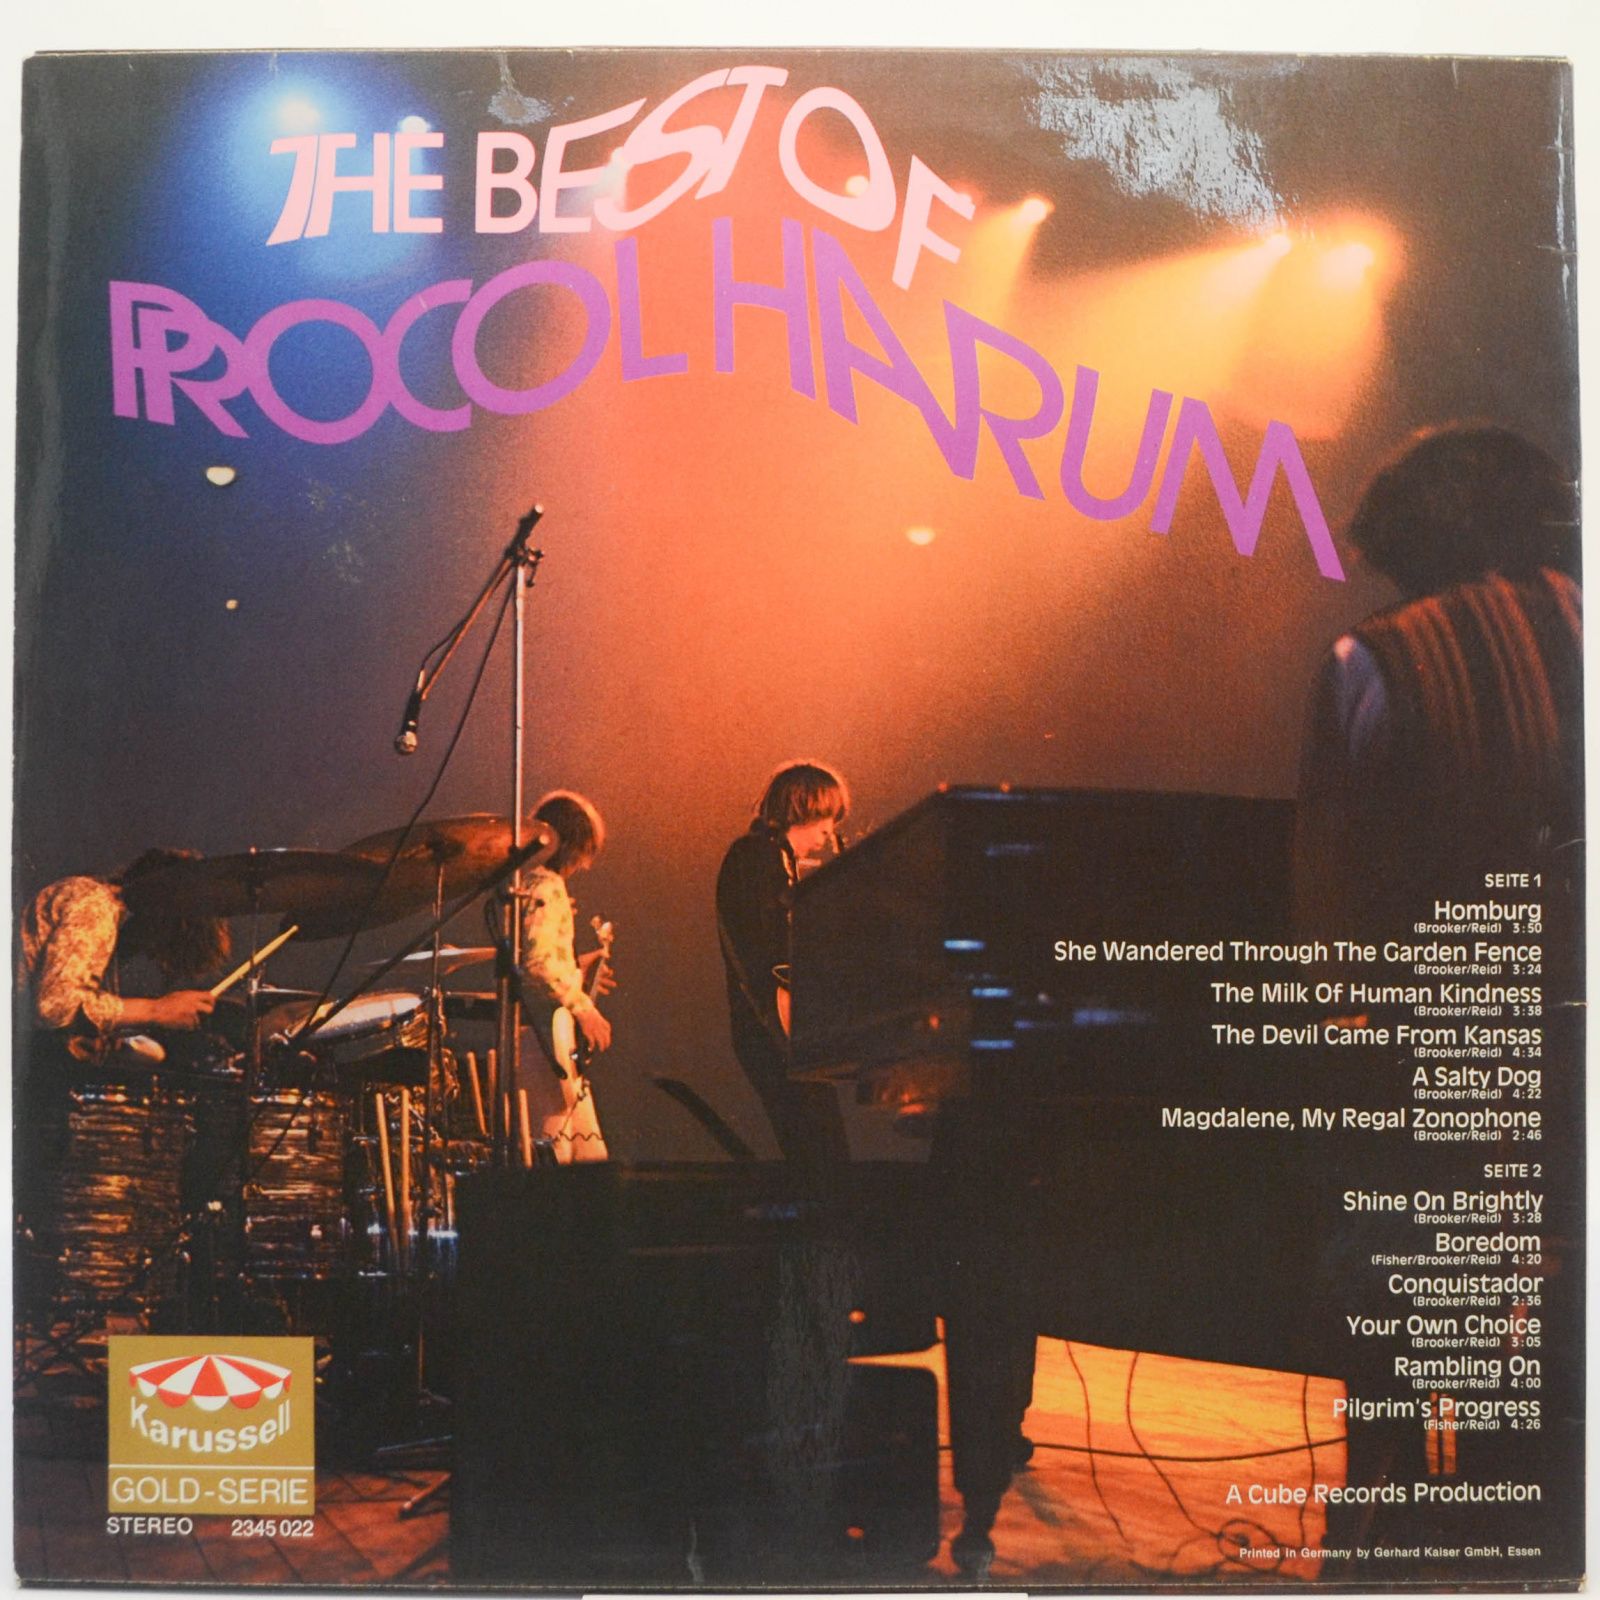 Procol Harum — The Best Of Procol Harum, 1971